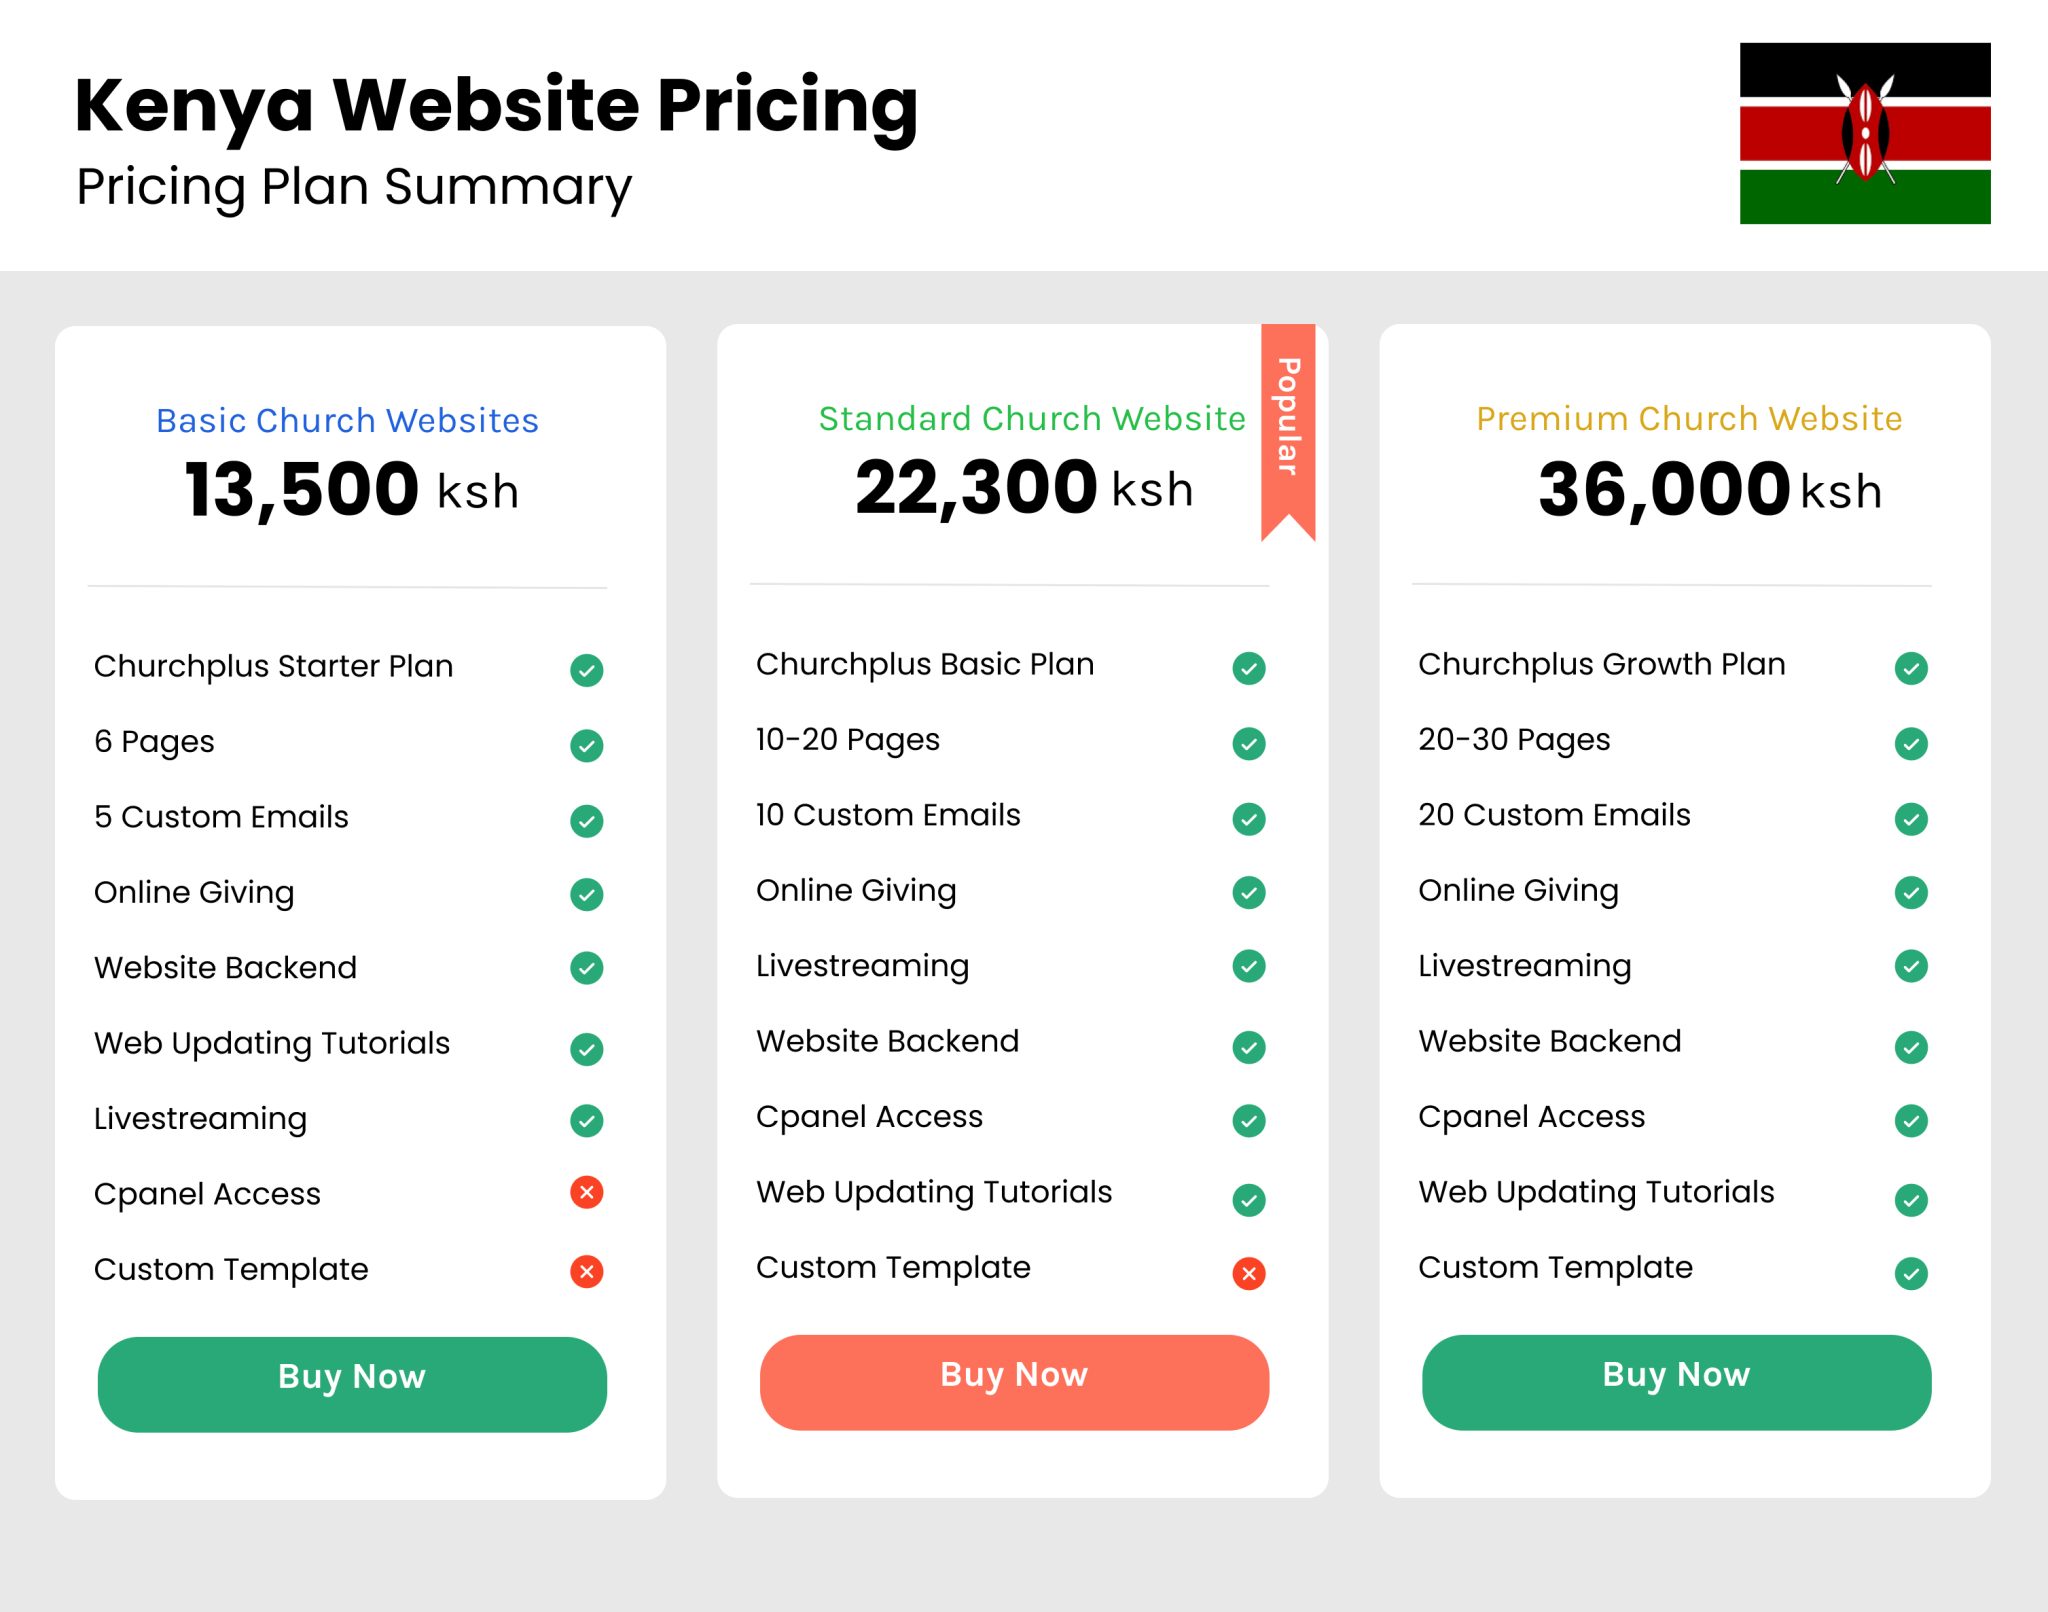 Kenya website